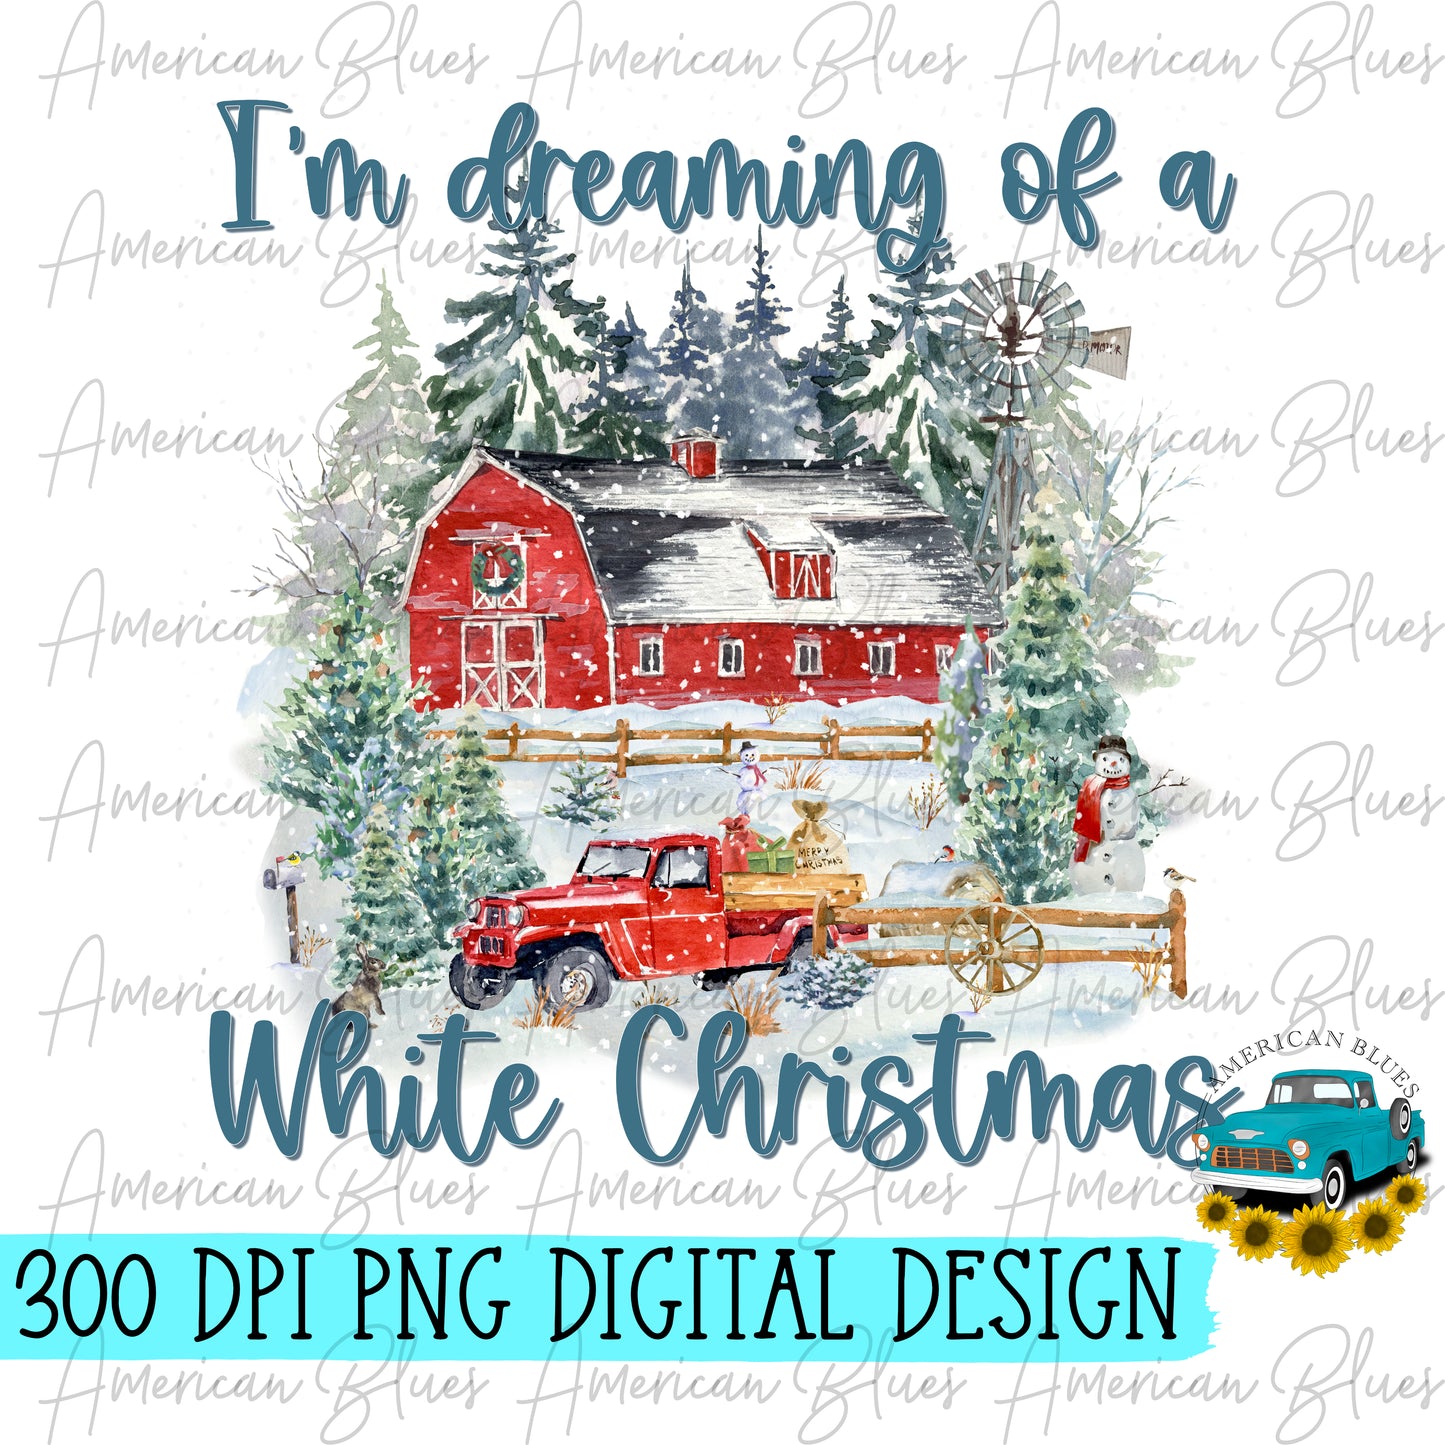 I'm dreaming of a white Christmas- farm scene